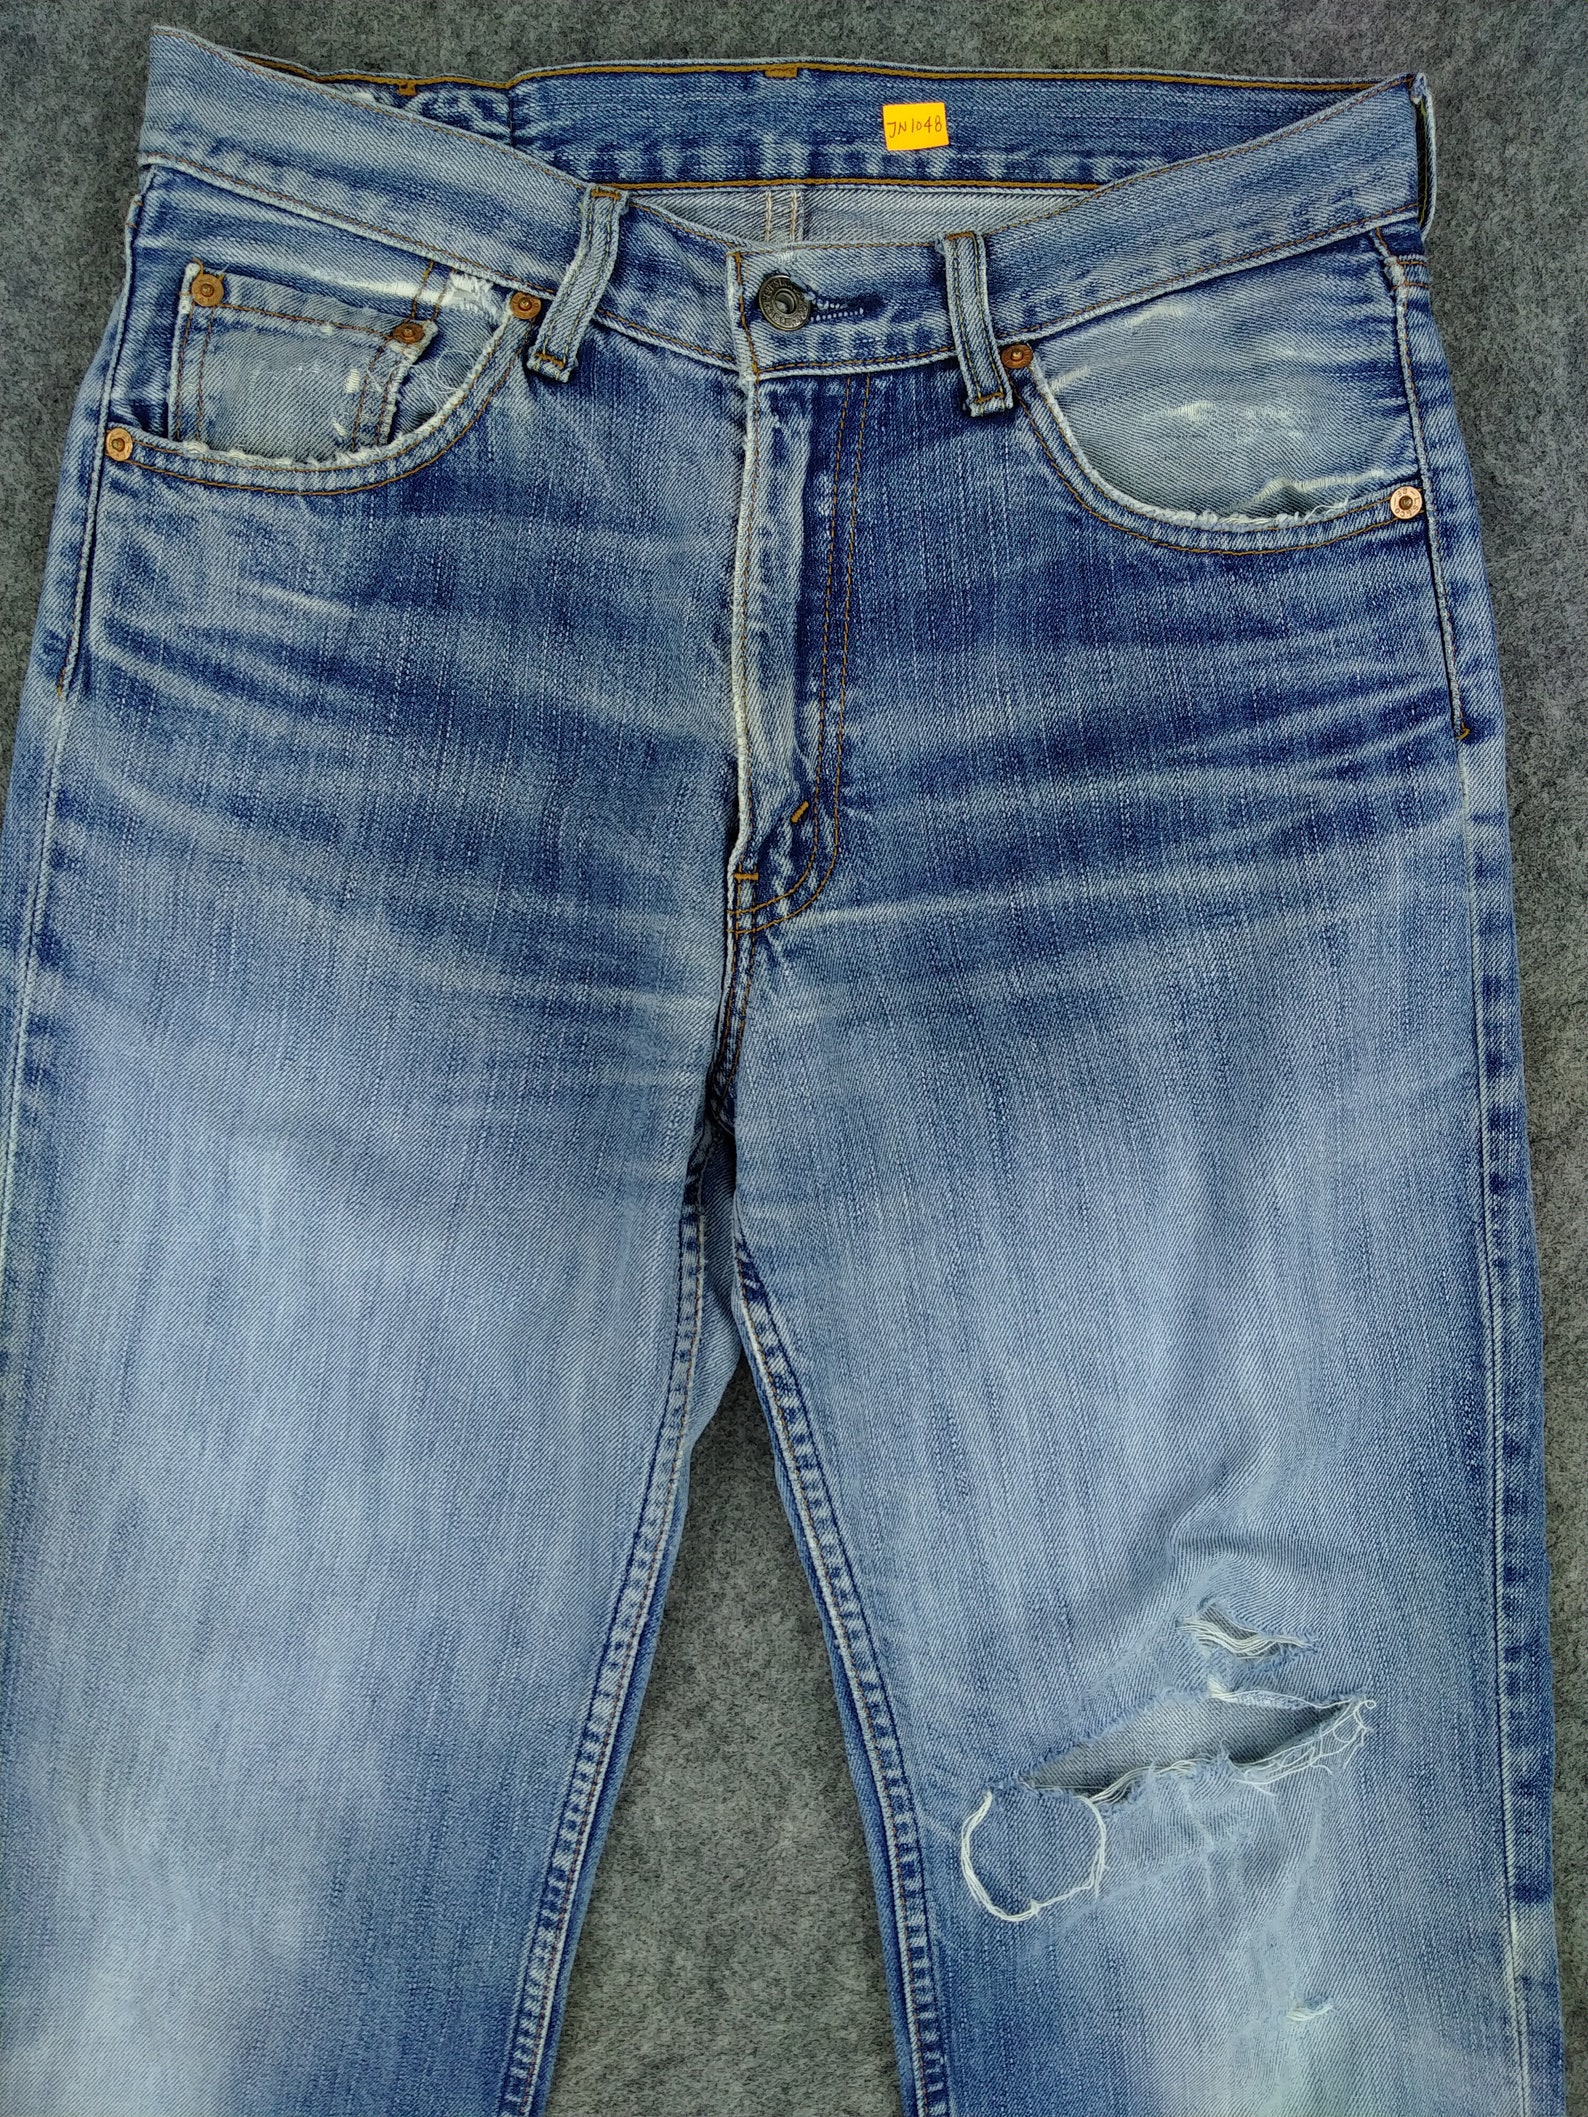 30x28 Vintage Levi's 502 Jeans Light Wash Denim Red Tab Faded Denim ...